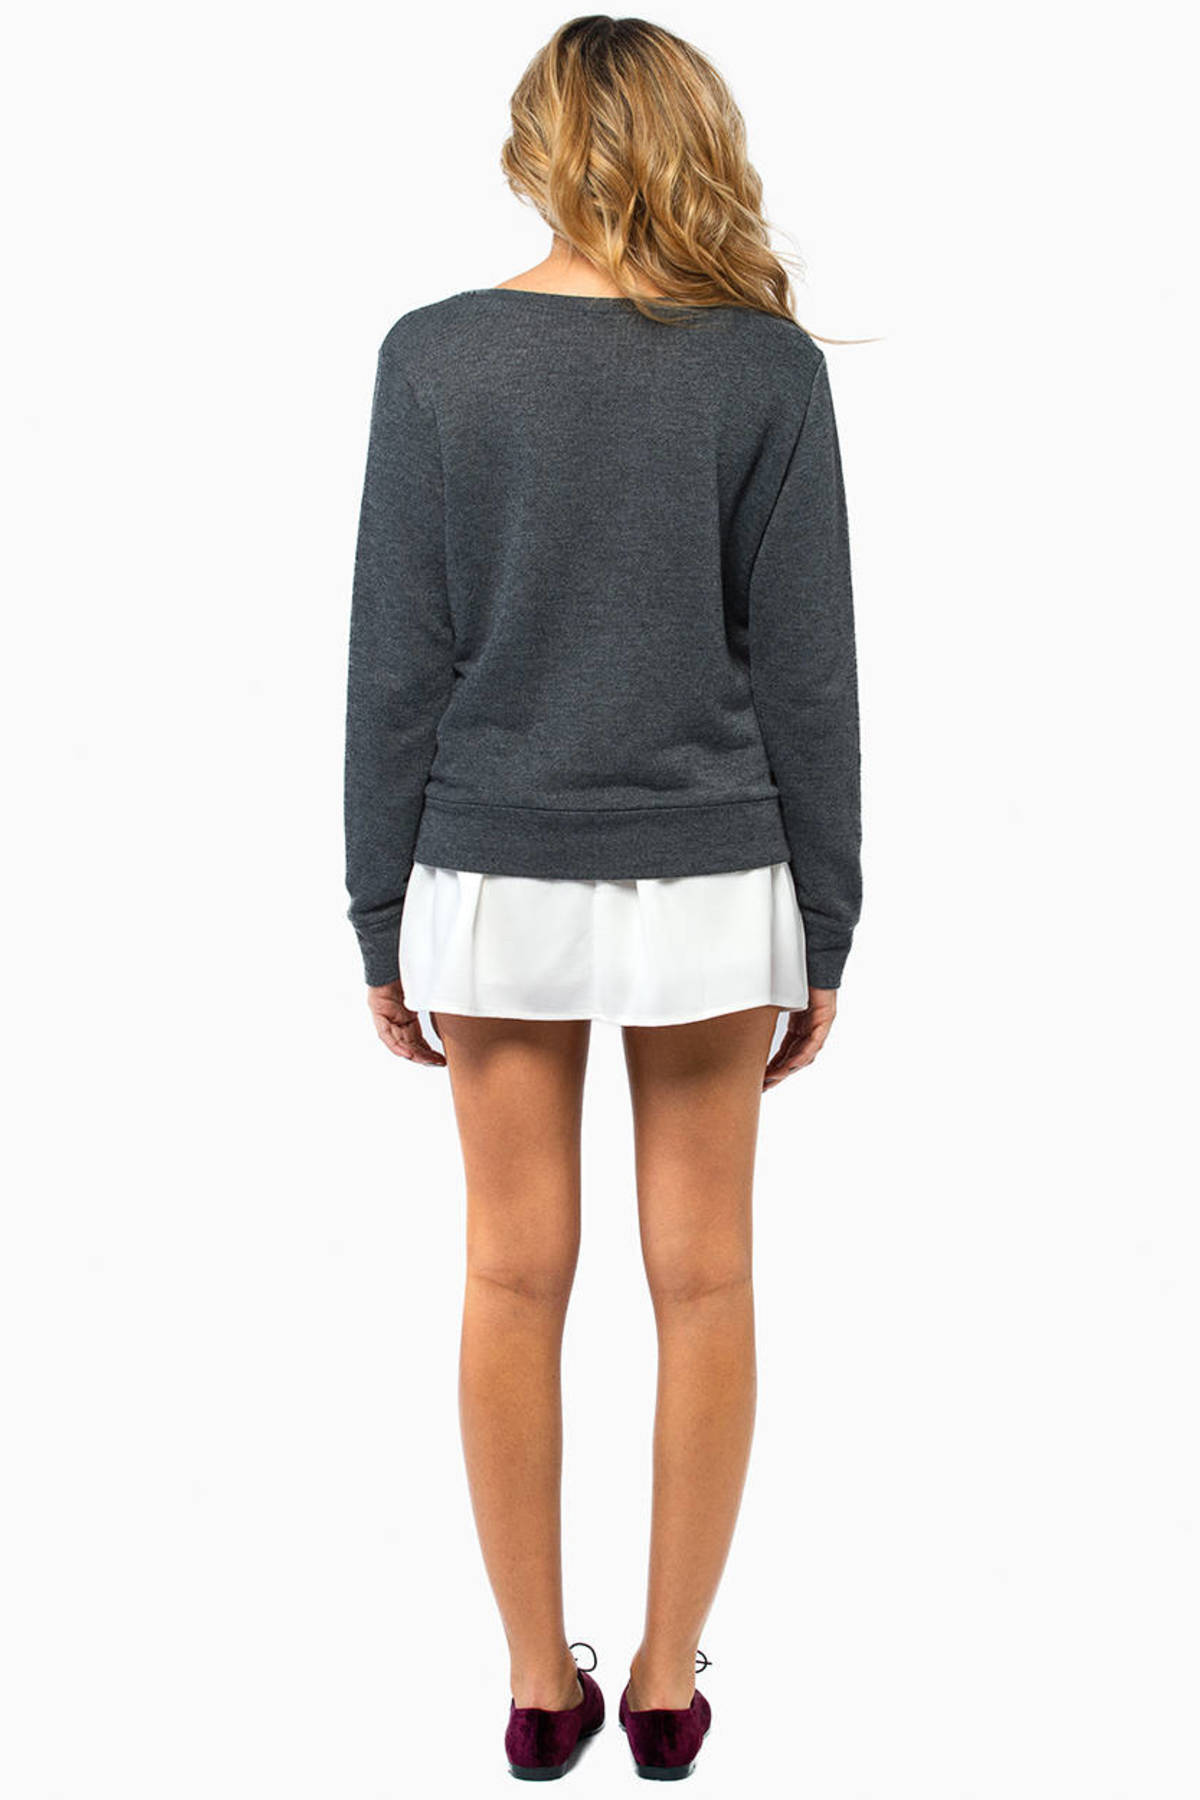 Creme de la Creme Sweater in Grey - $42 | Tobi US